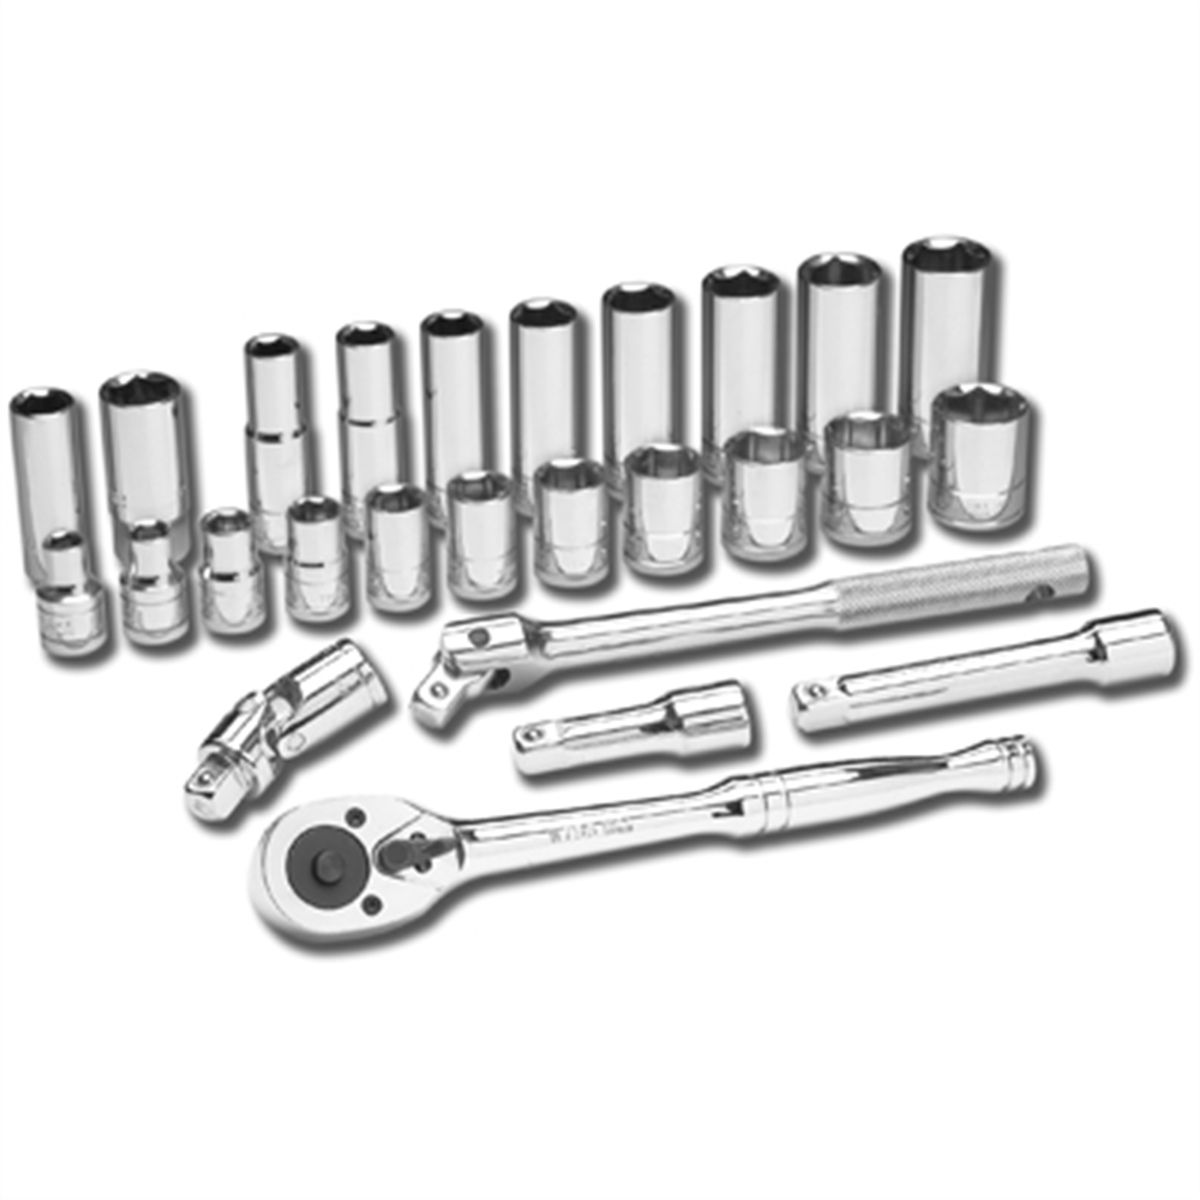 26 Pc Metric Combination Wrench Set | Genius Tools | PR-026M